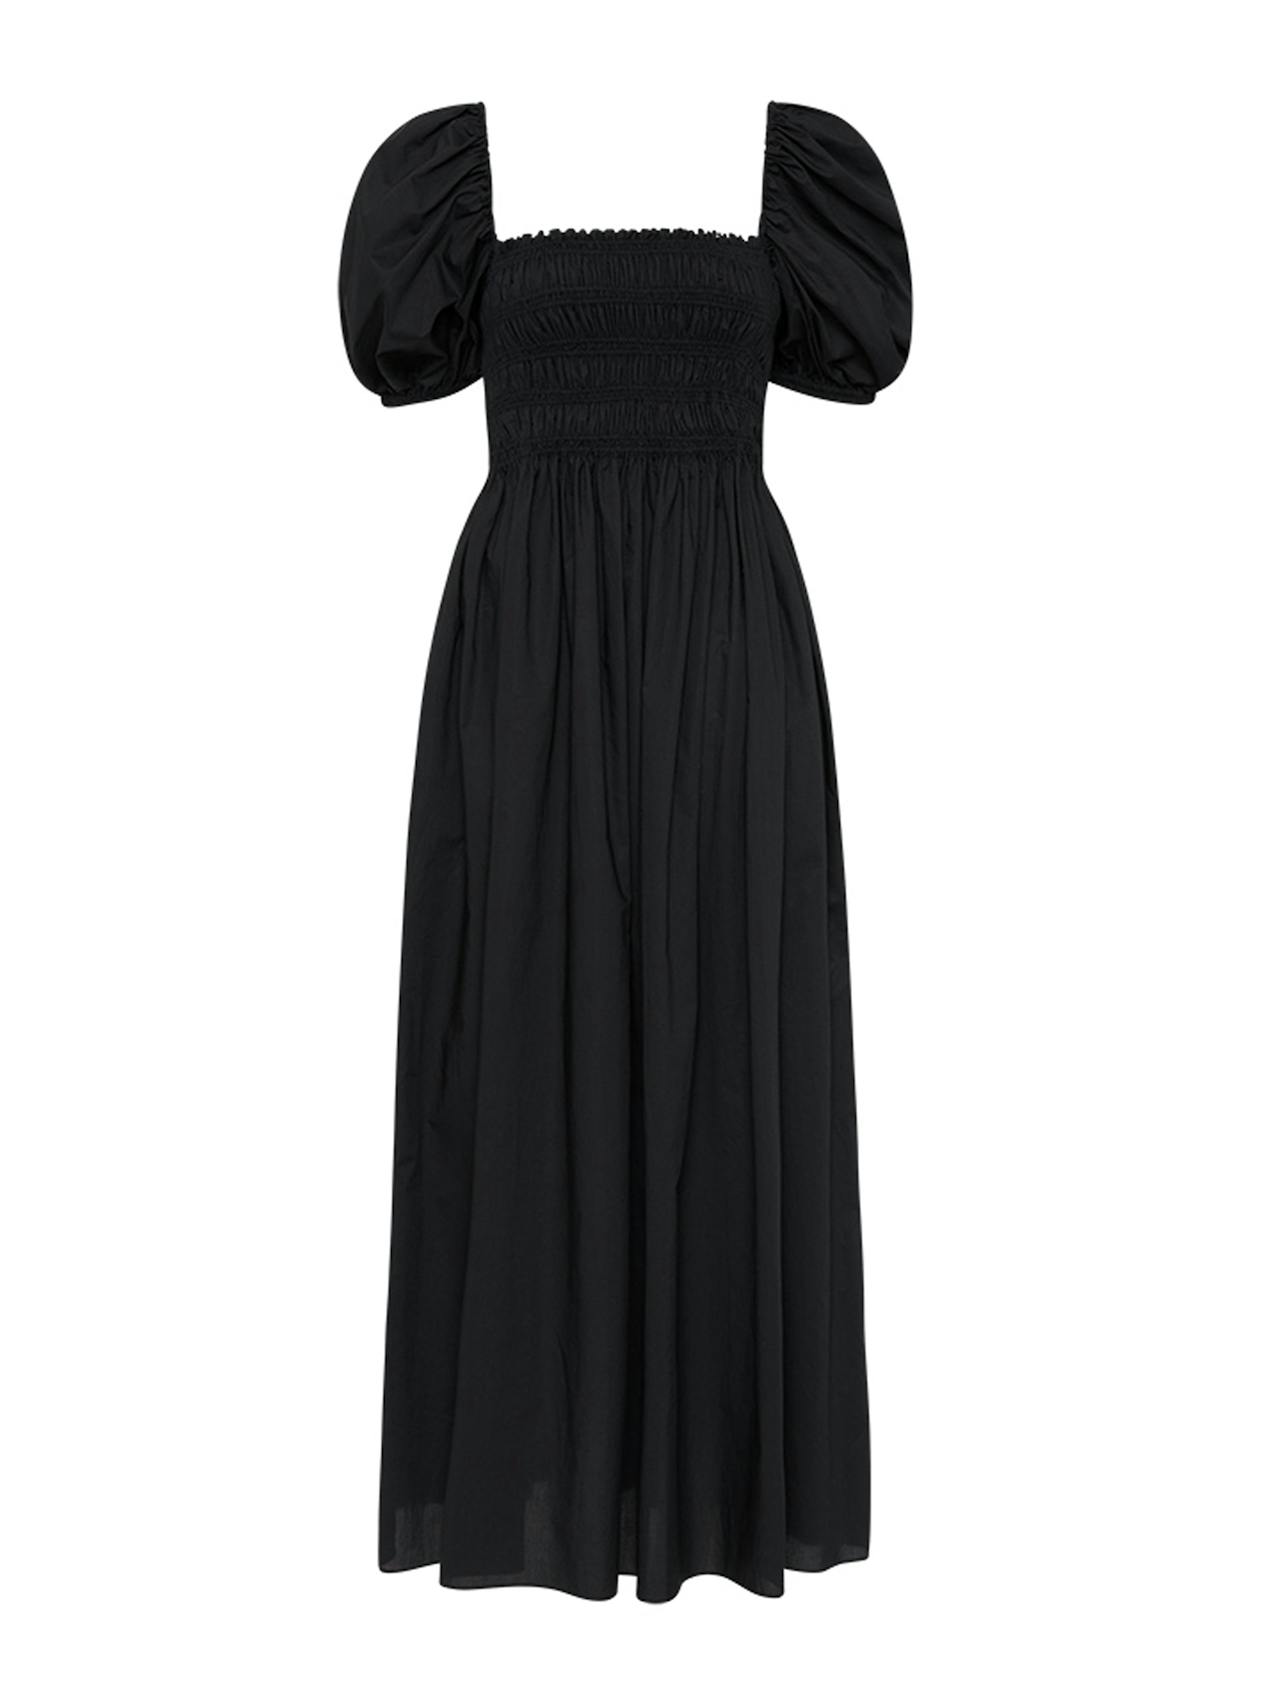 Black shirred bodice peasant dress